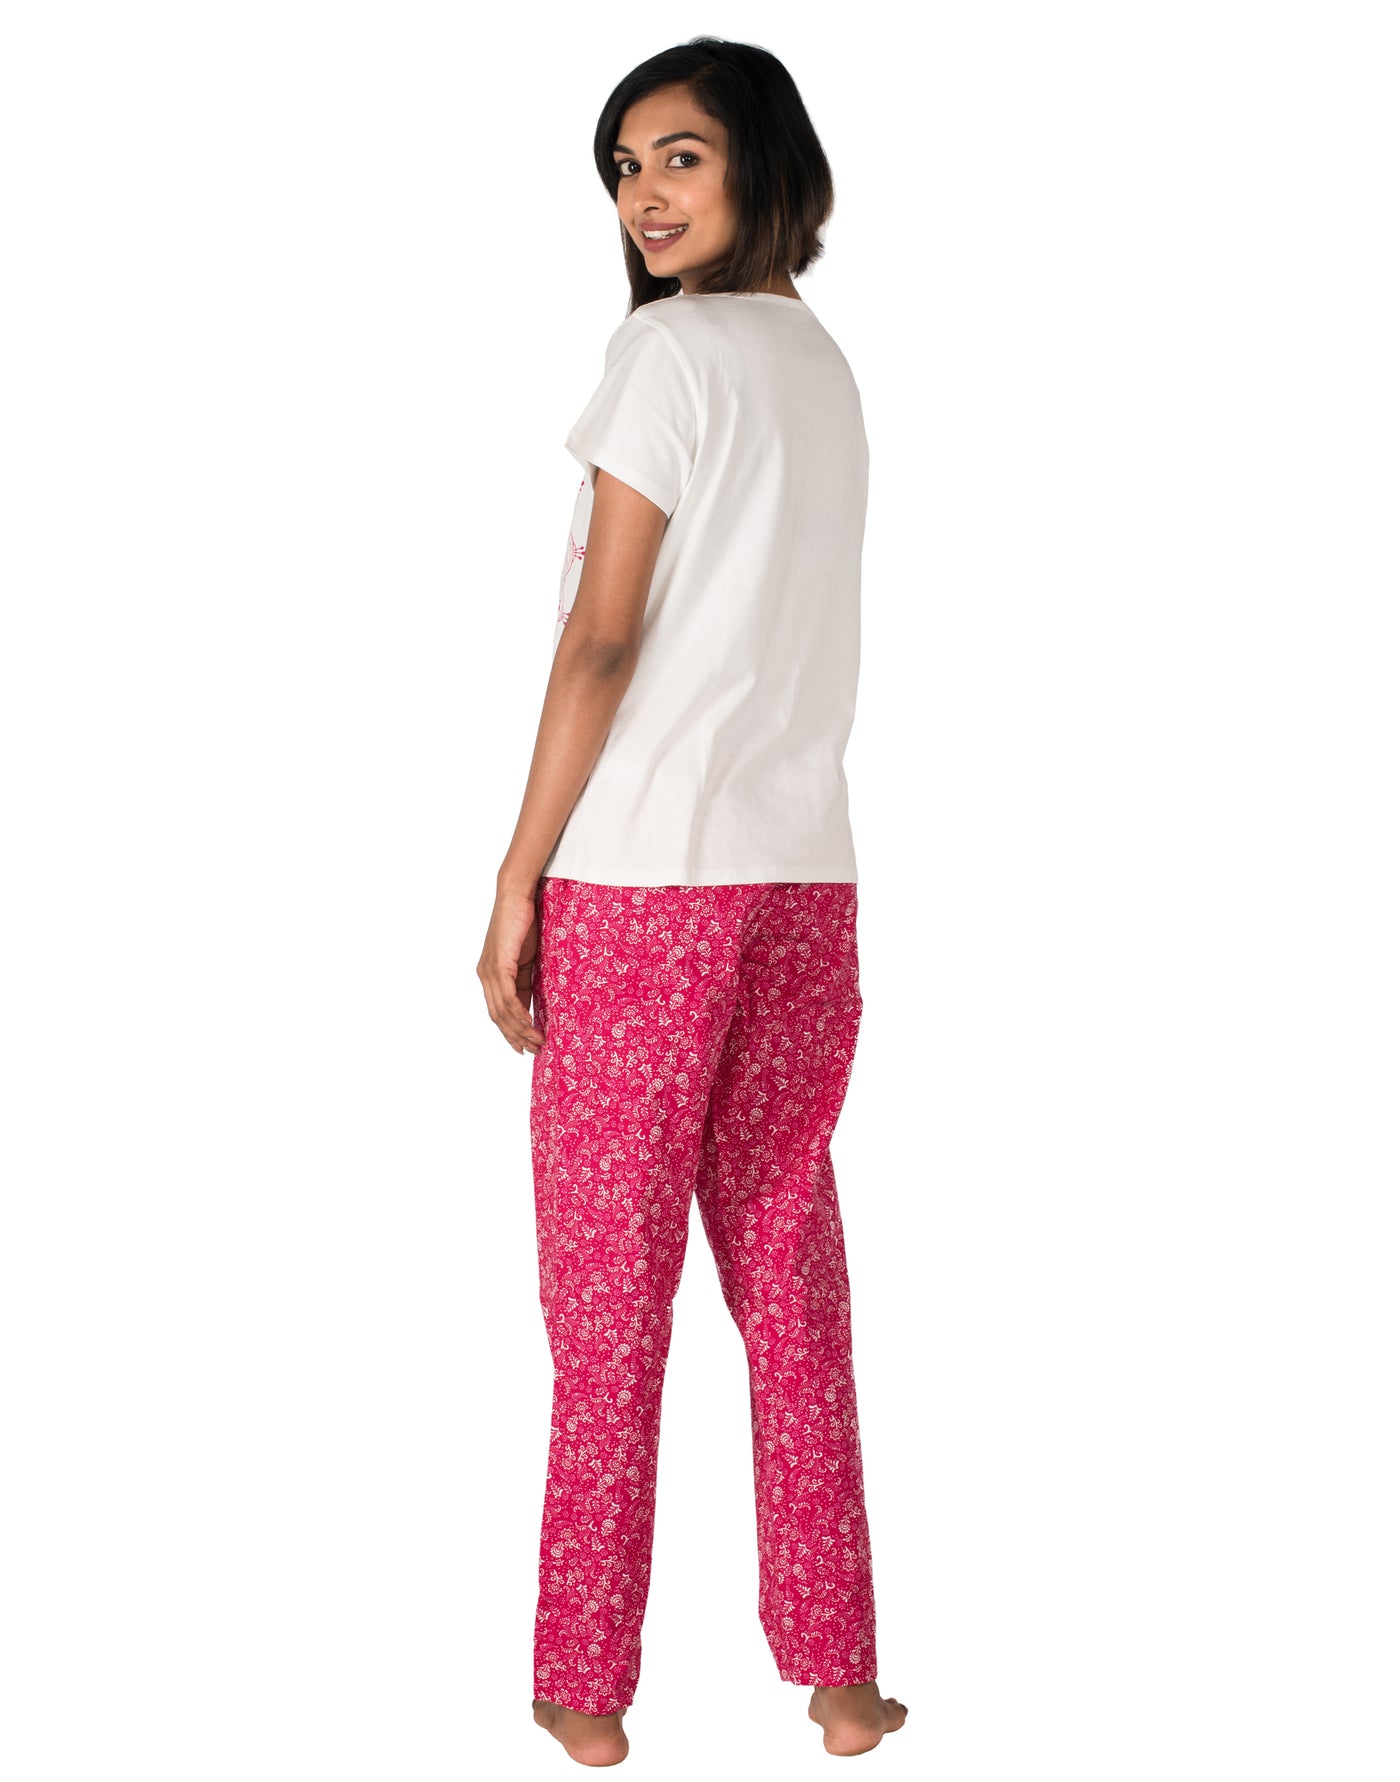 Pyjama Set for Women-Pink Rangoli Print